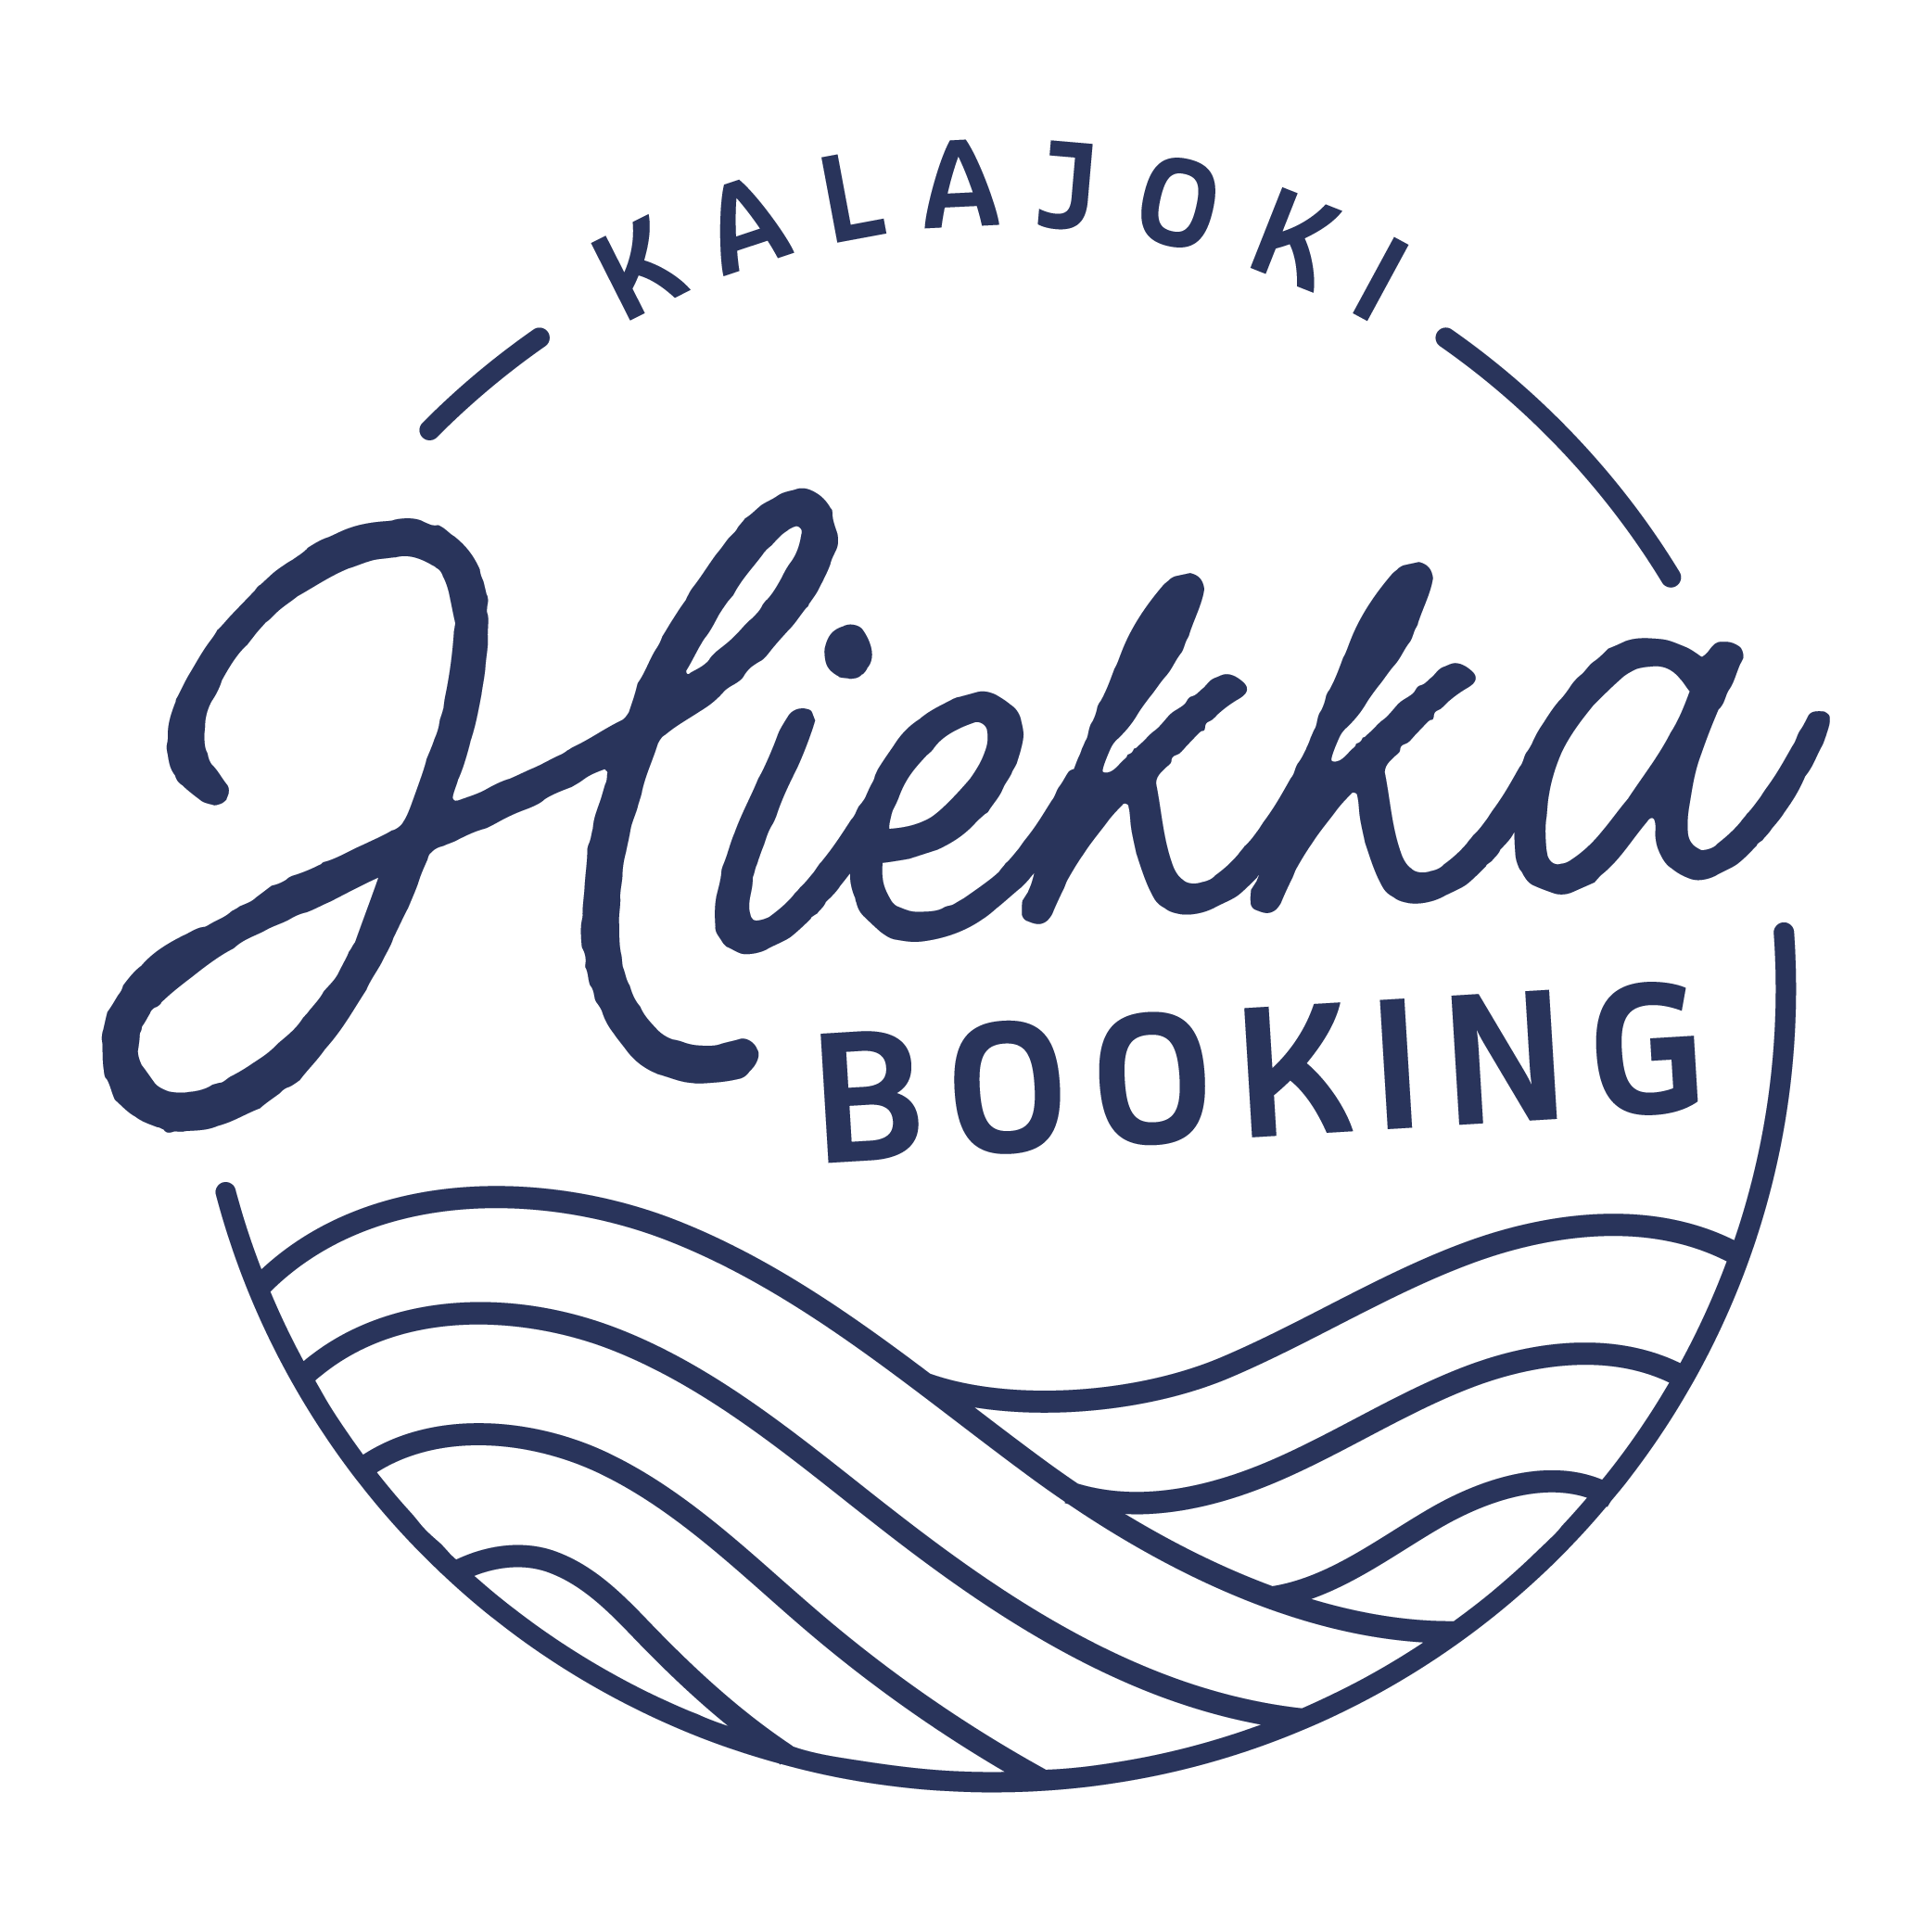 Hiekka Booking logo